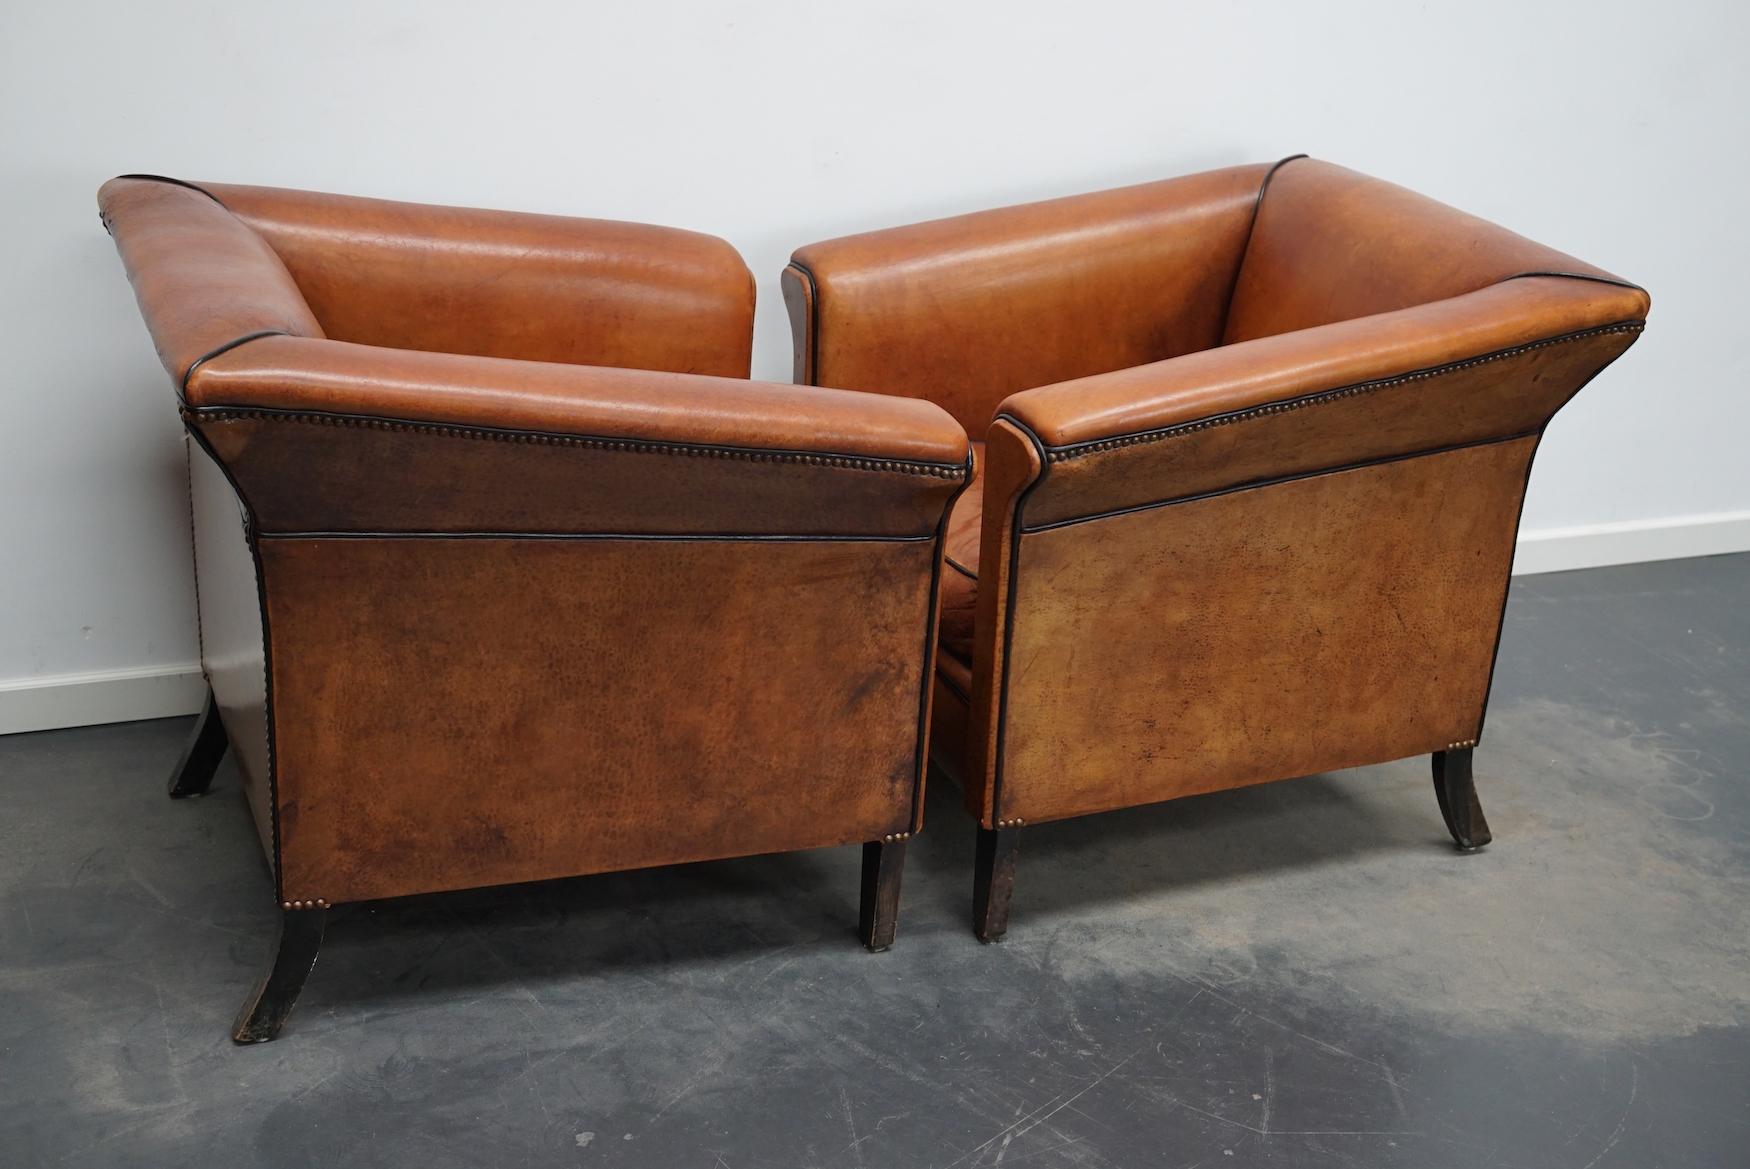 Industrial Vintage Dutch Cognac Leather Club Chairs Art Deco Style, Set of 2